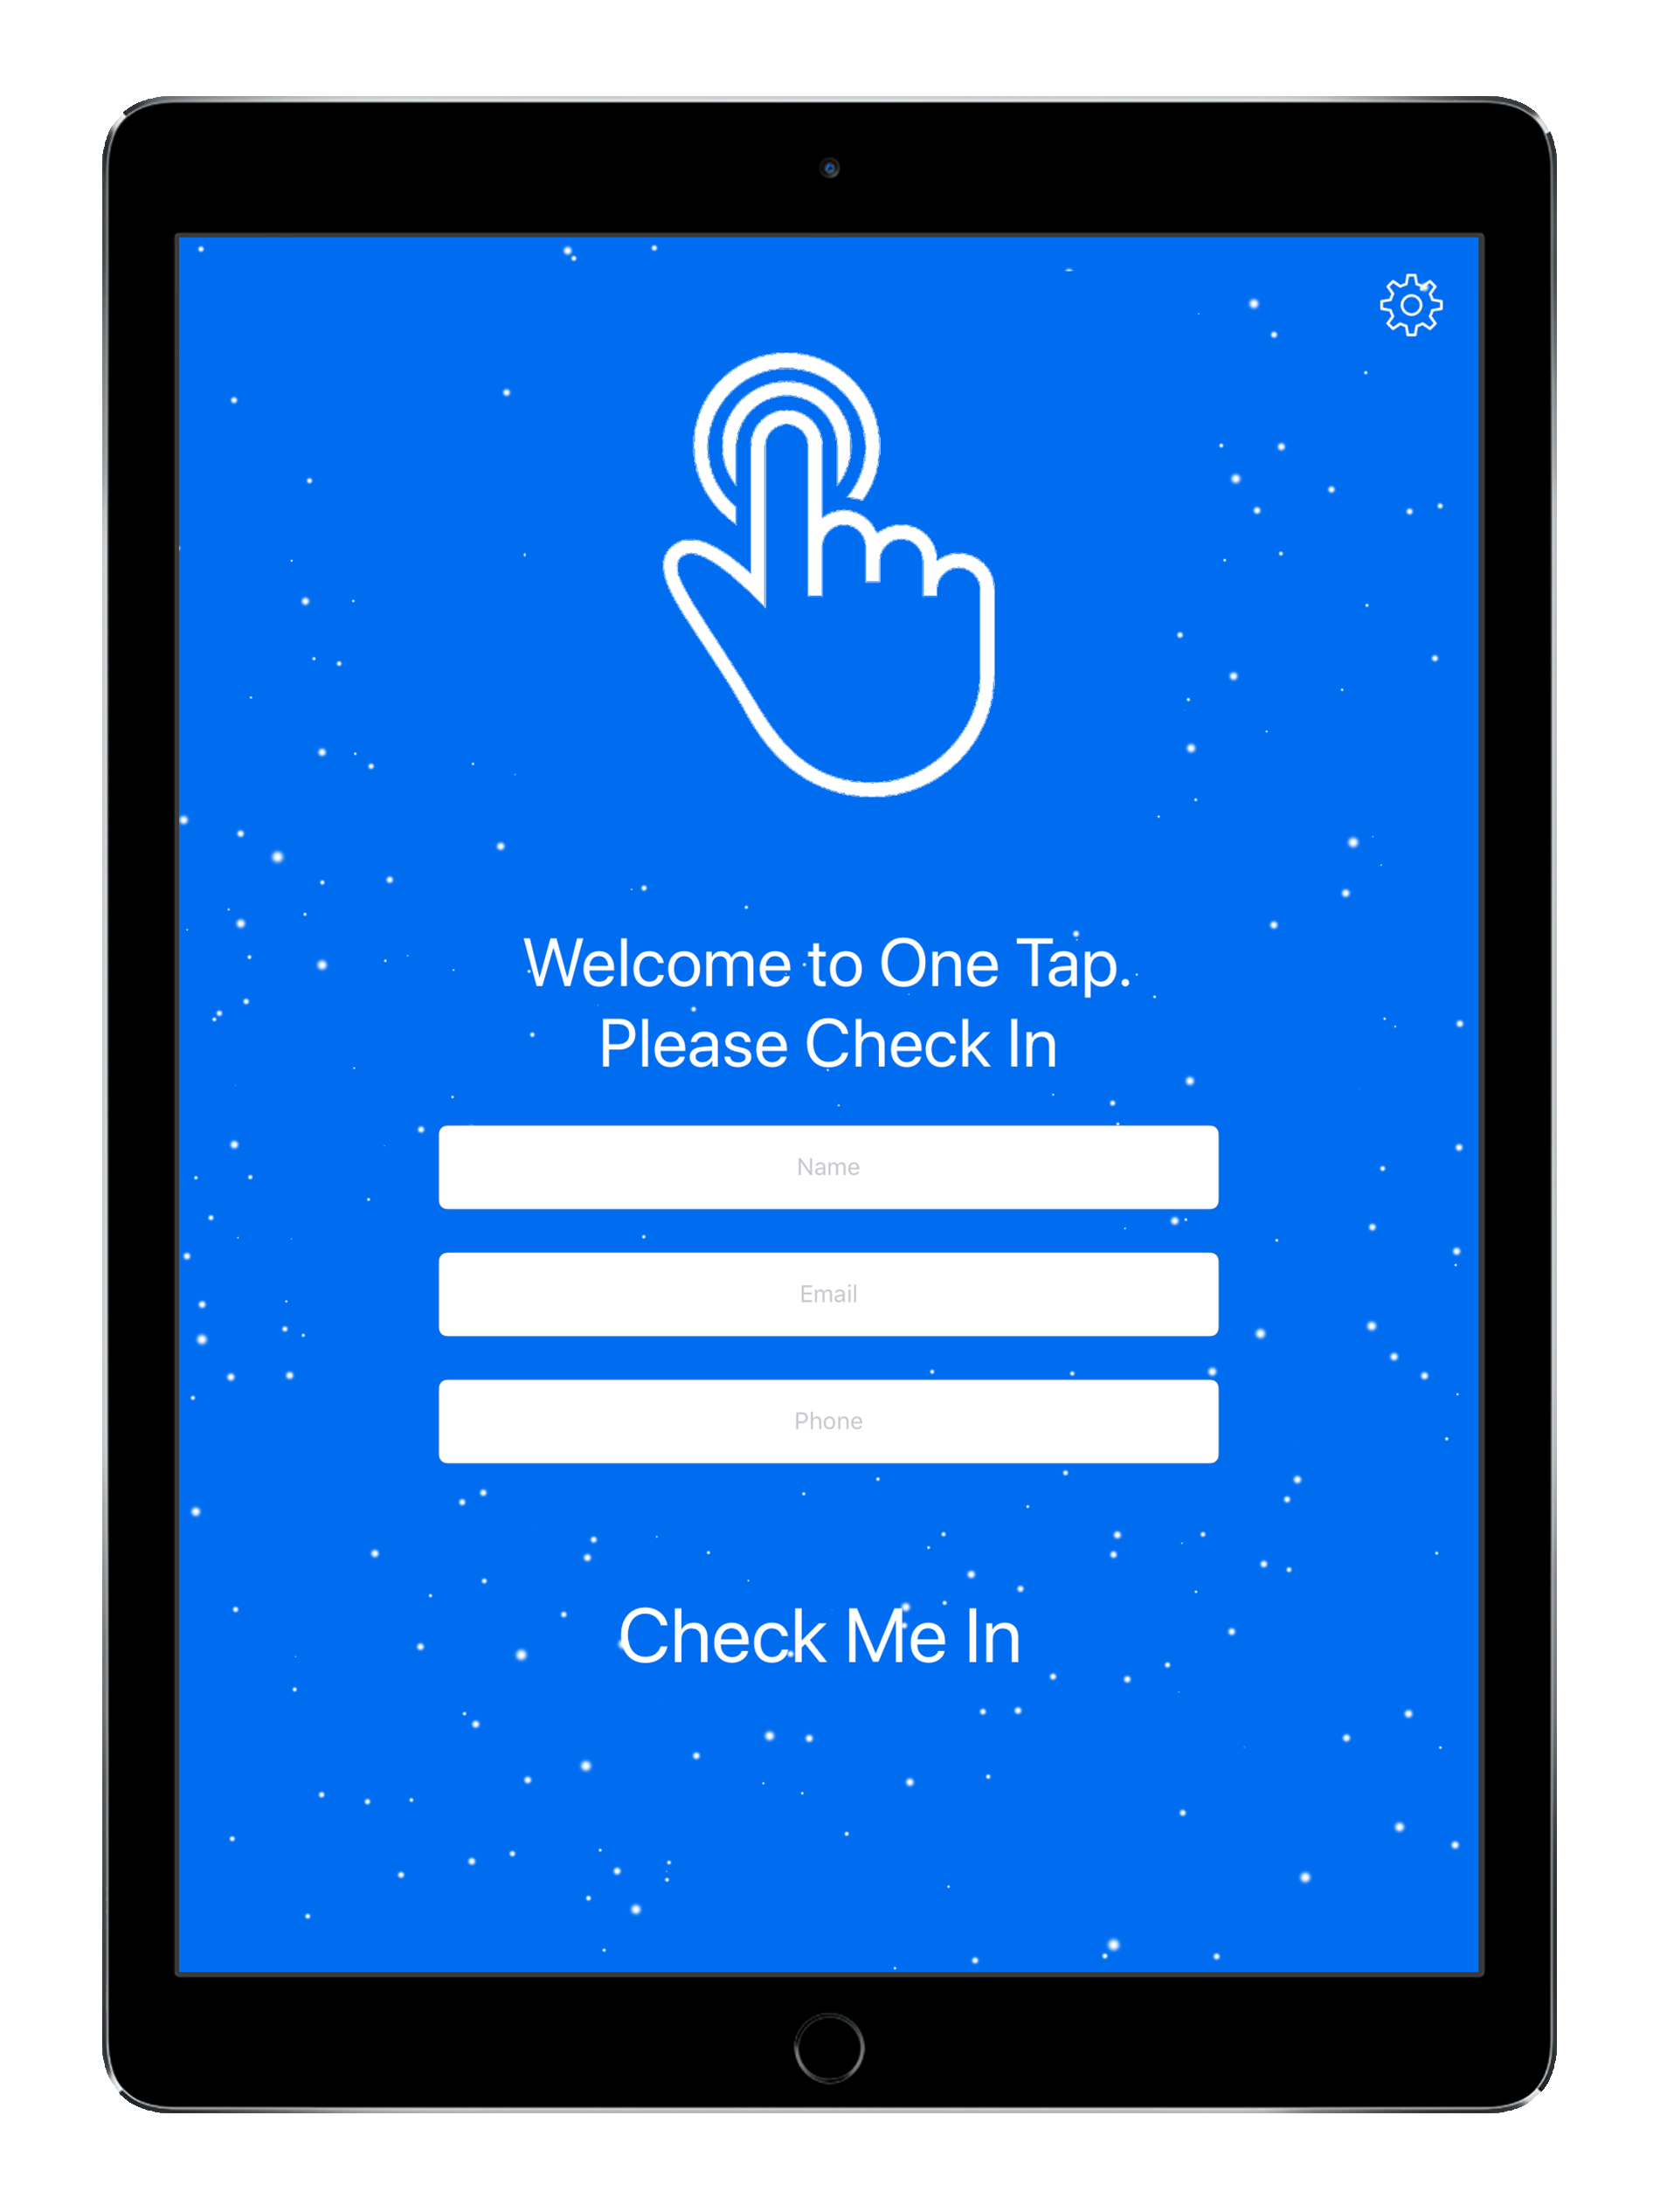 OneTap iOS app for iPad in kiosk mode.